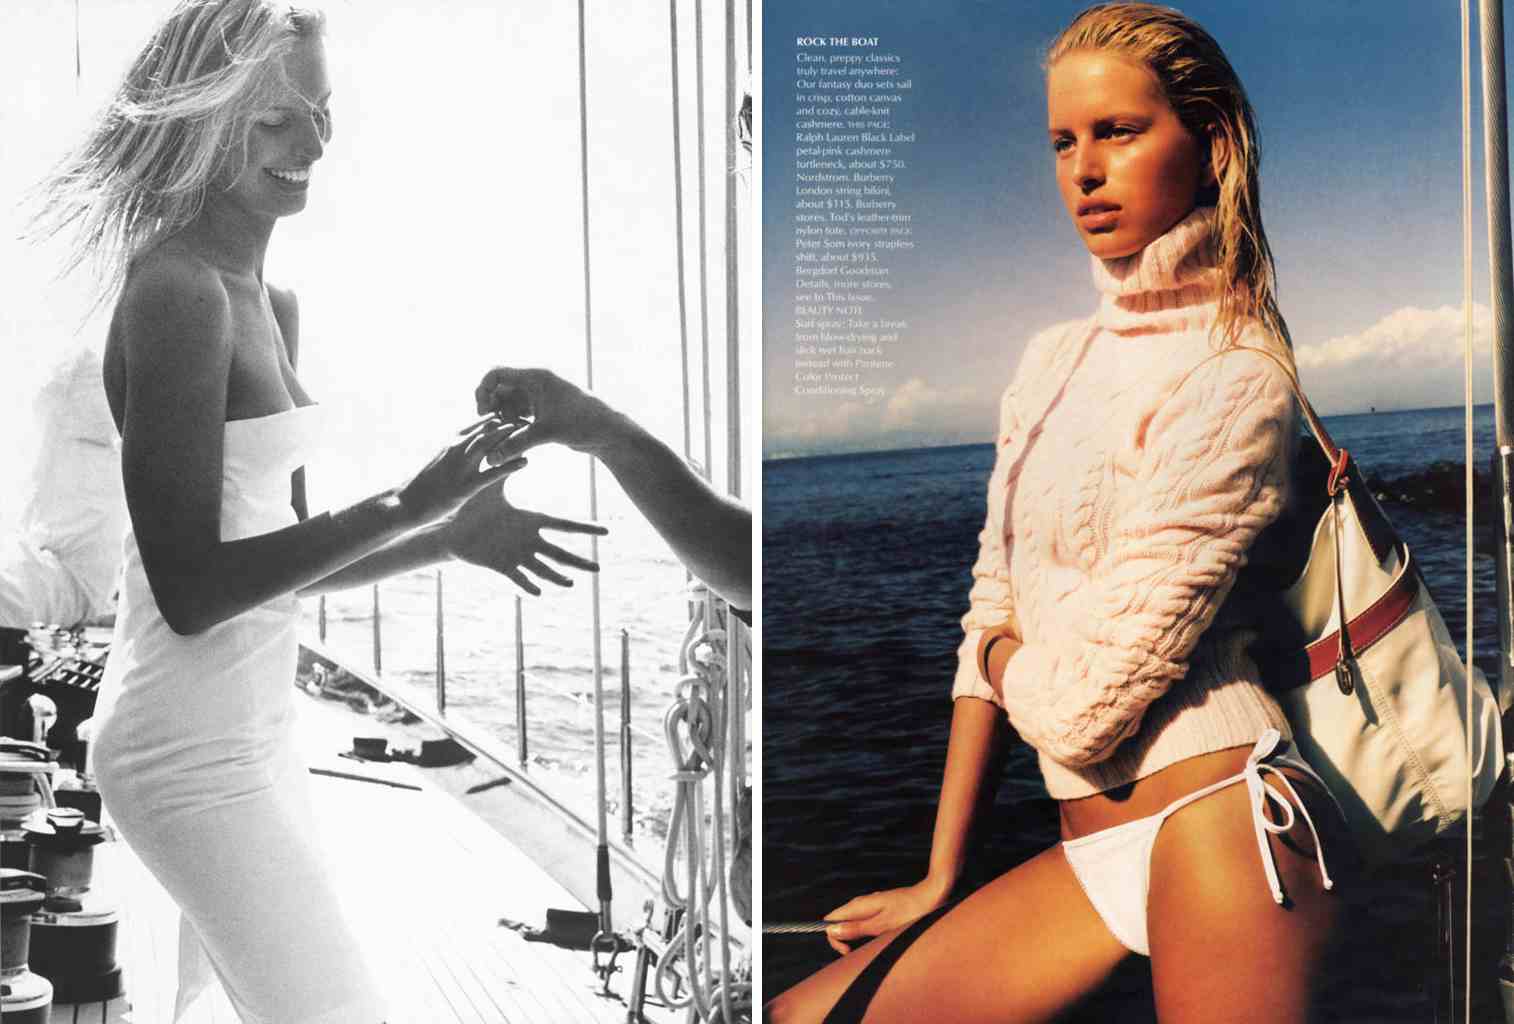 VOGUE USA - 2003
Photographer: Mario Testino
Model: Karolina Kurkova - Hayden Christensen
Stylist: Tonne Goodman
Location: Capri - Italy